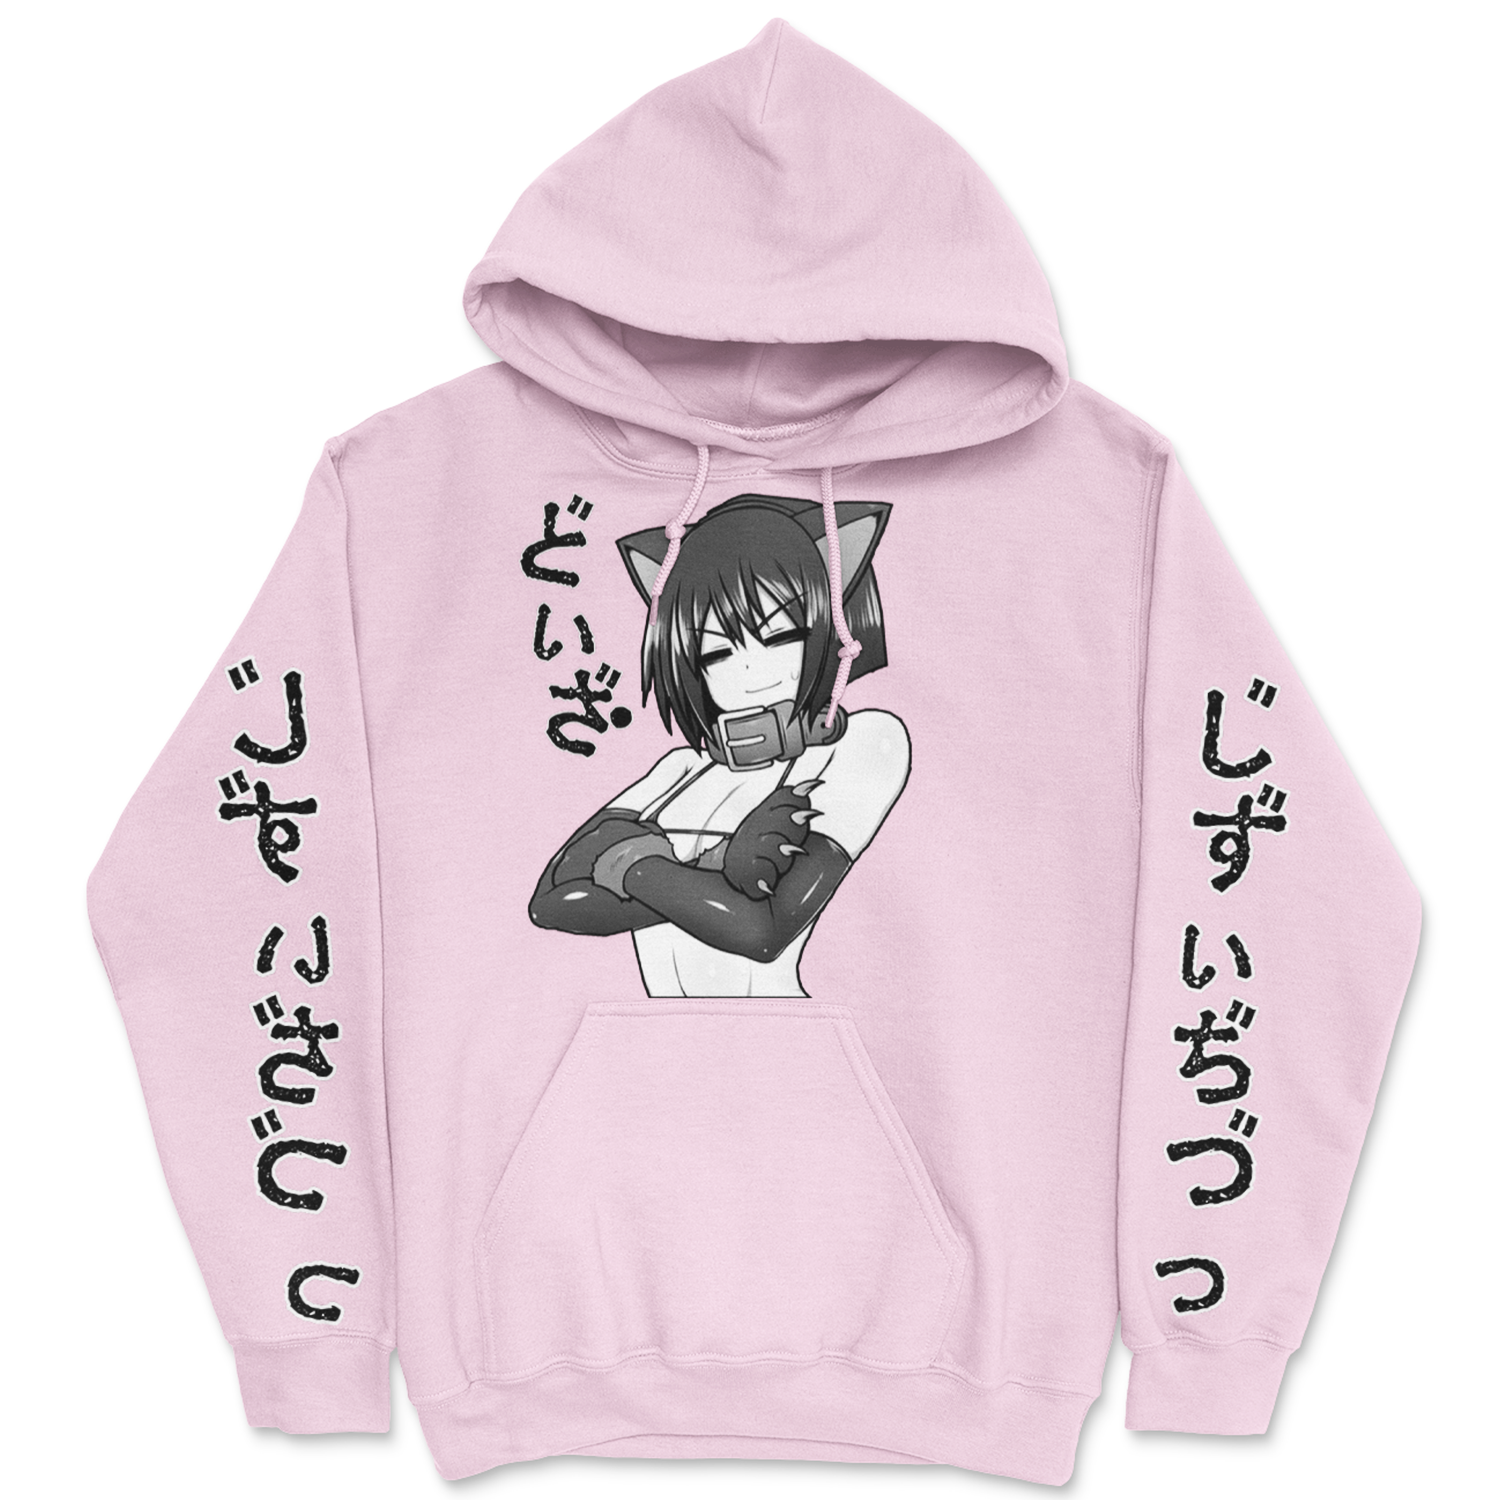 Necchi - Eternal Dreamz Clothing Anime Streetwear & Anime Clothing